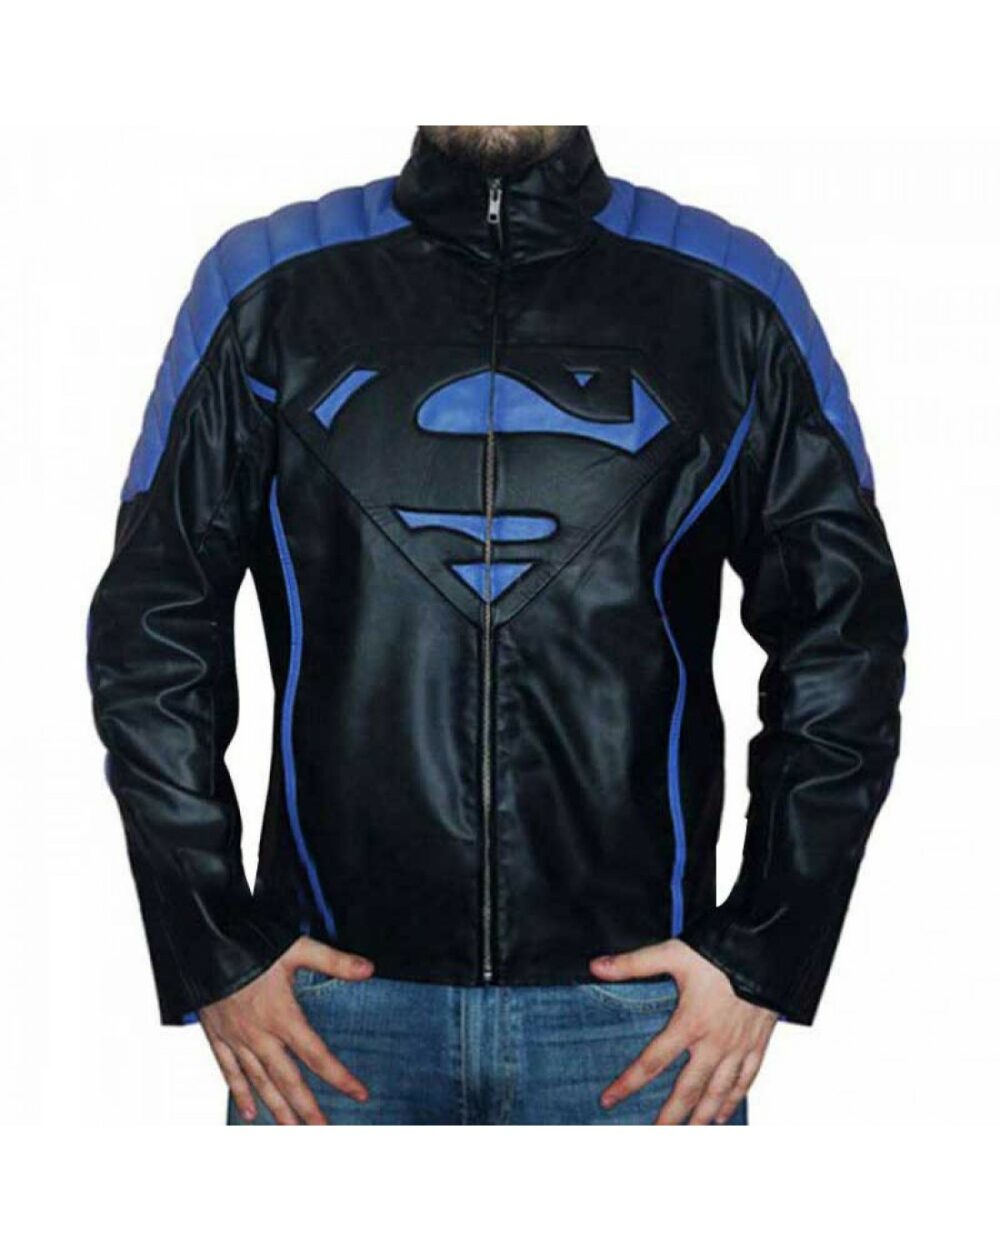 Superman Inspired Smallville Black & Blue Leather Jacket